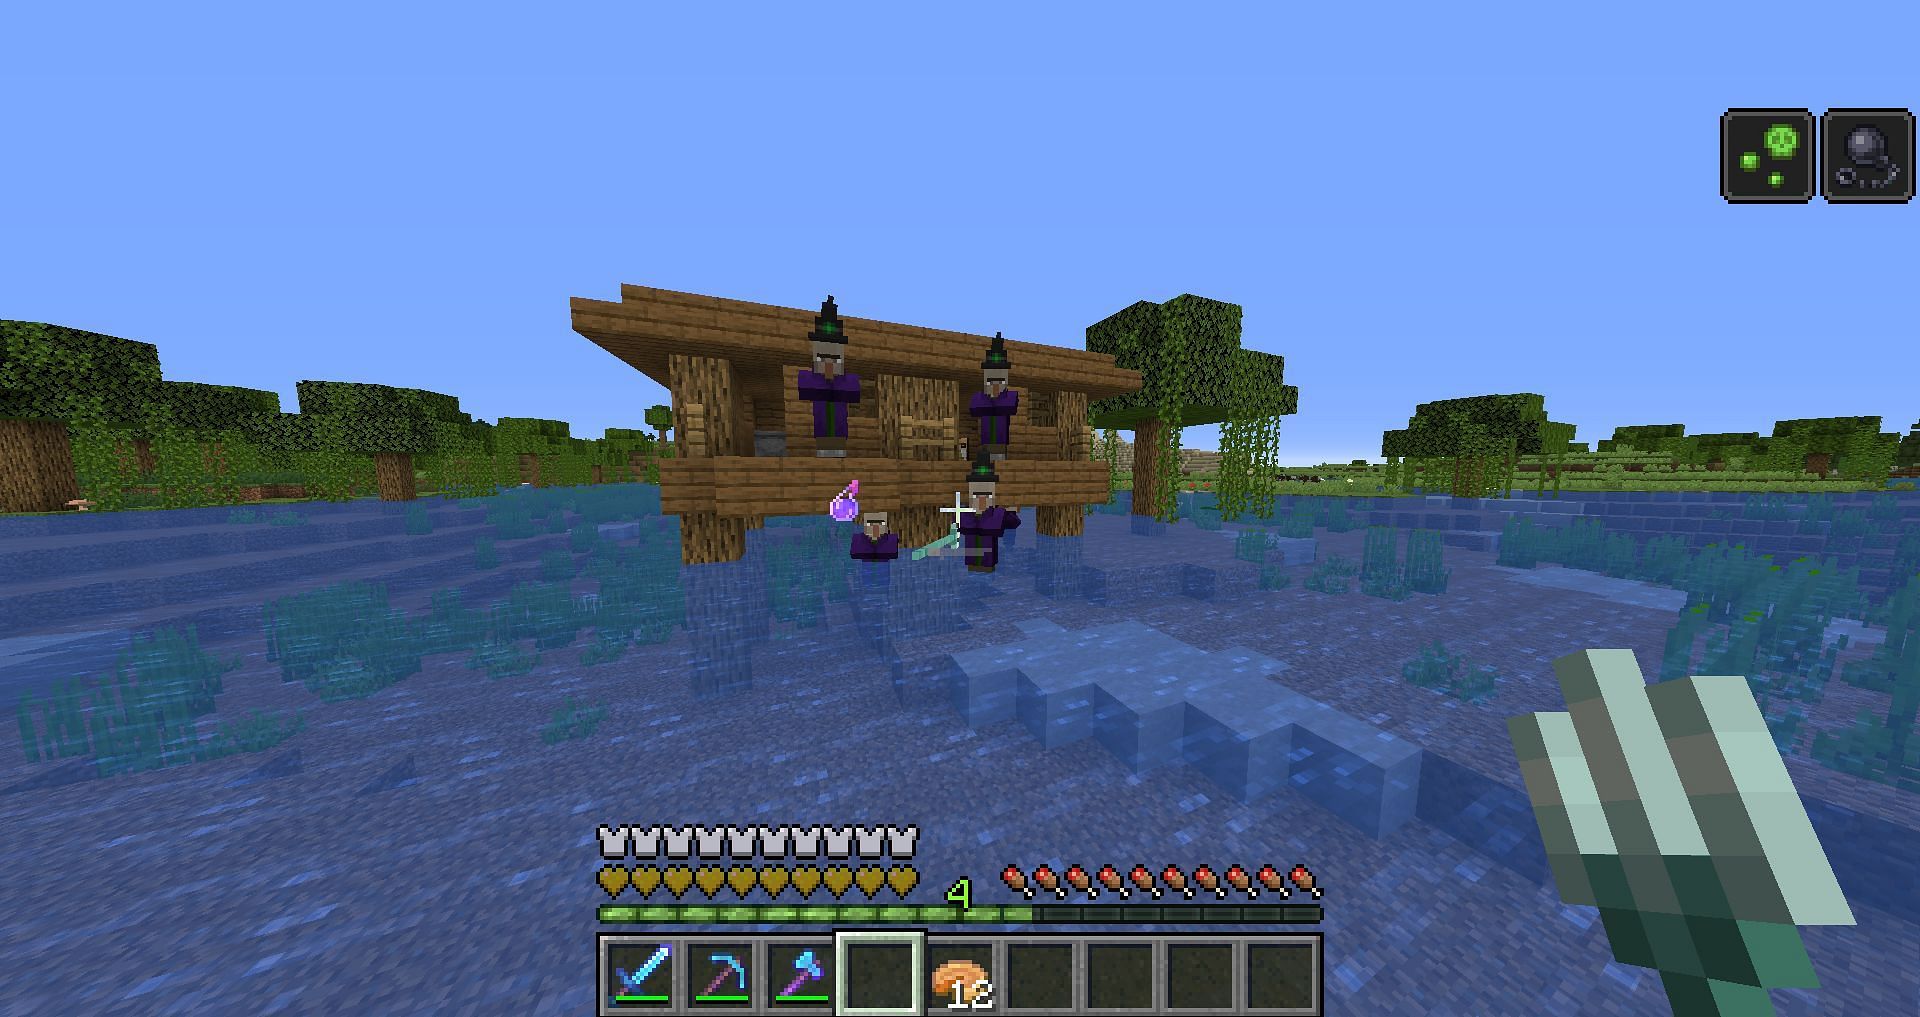 Swamp hut (Image via Minecraft)